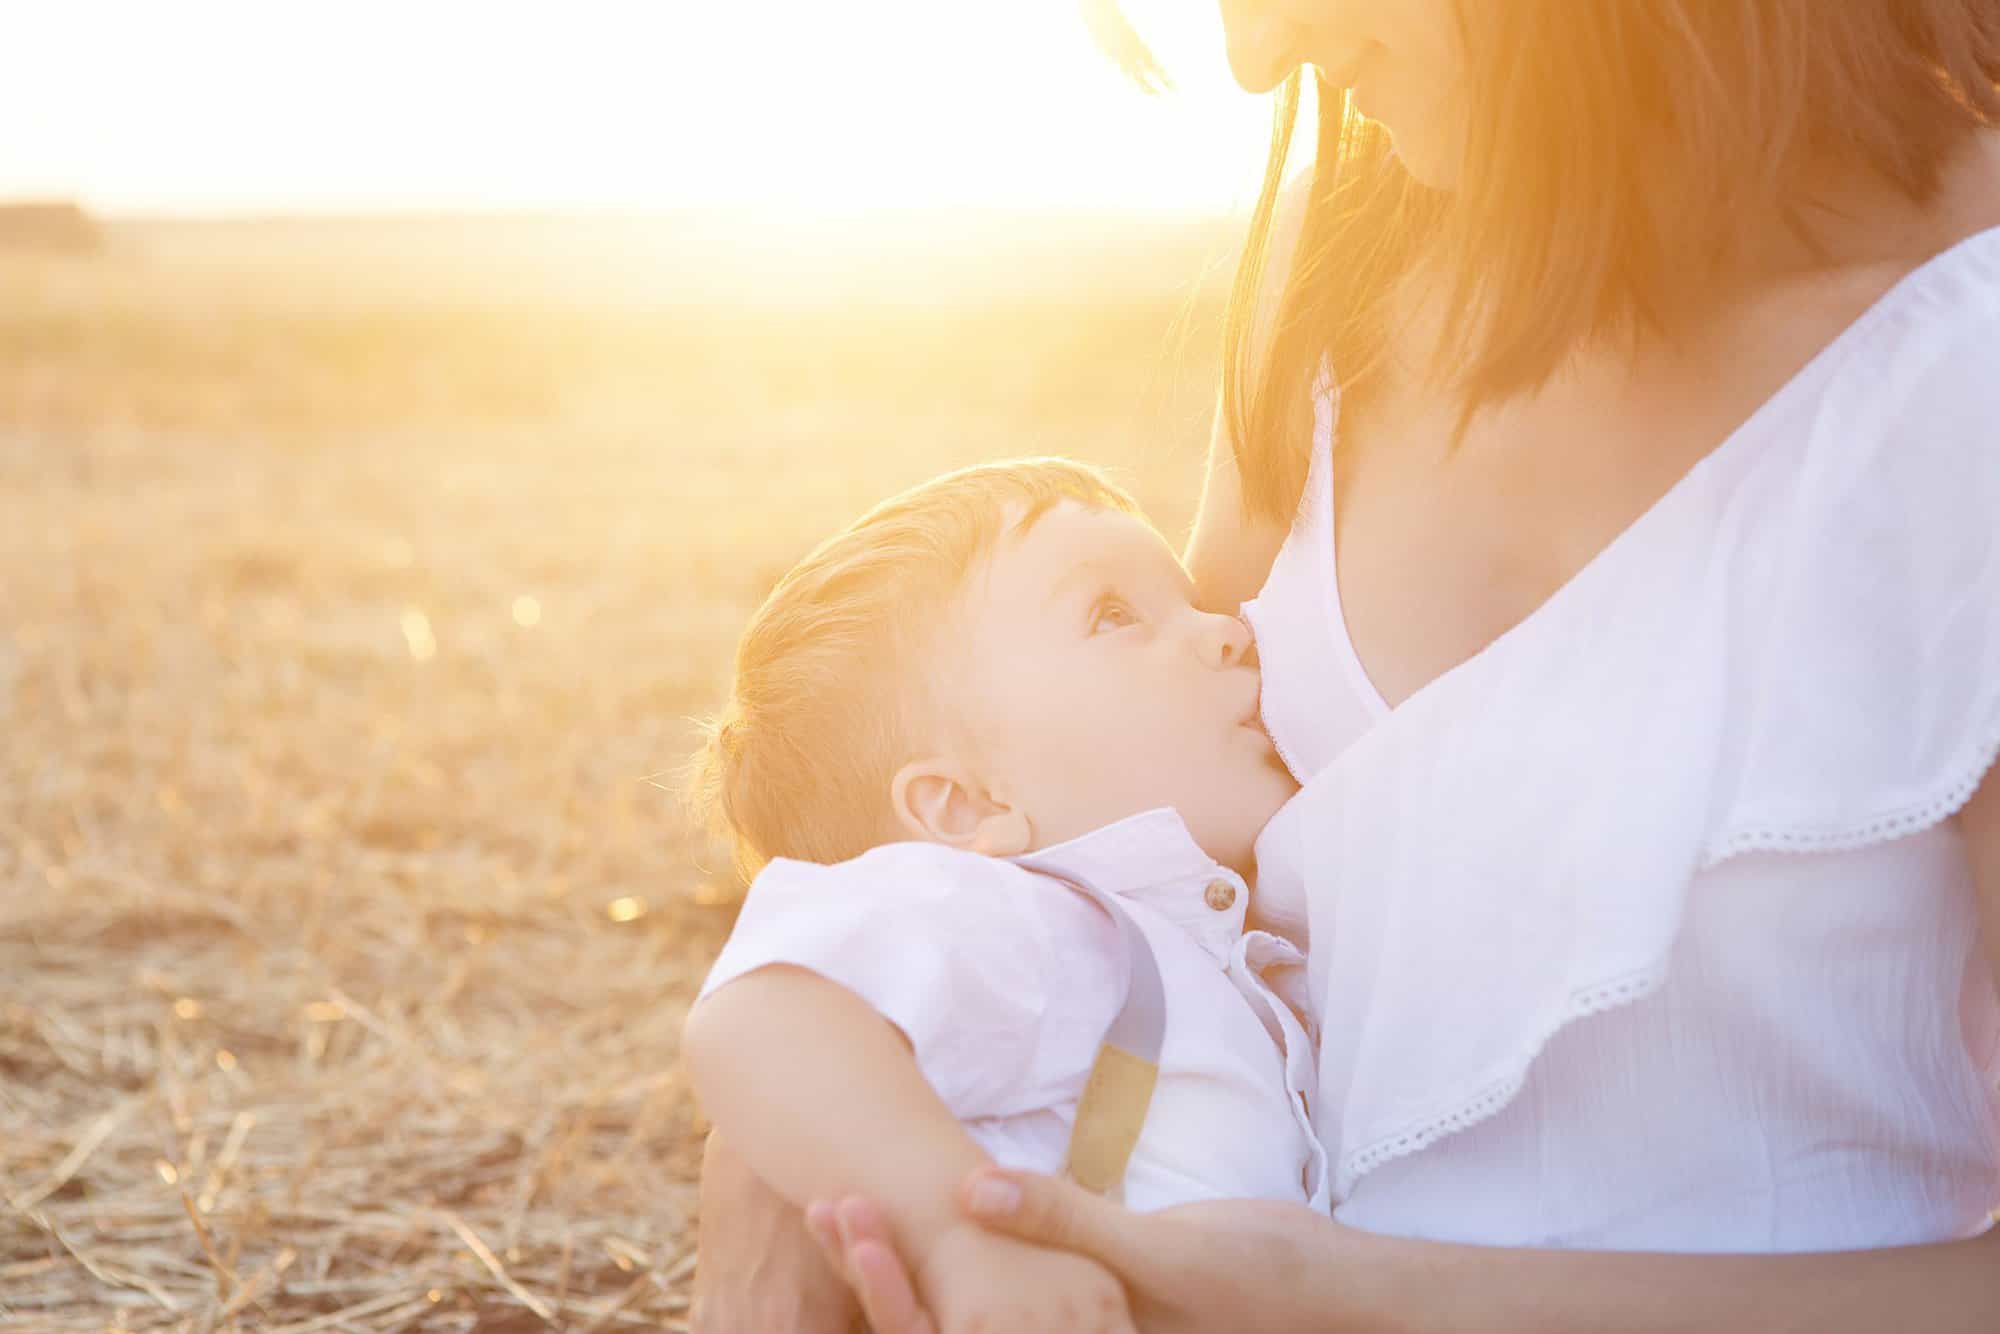 Estudio: La lactancia materna exclusiva previene el asma infantil